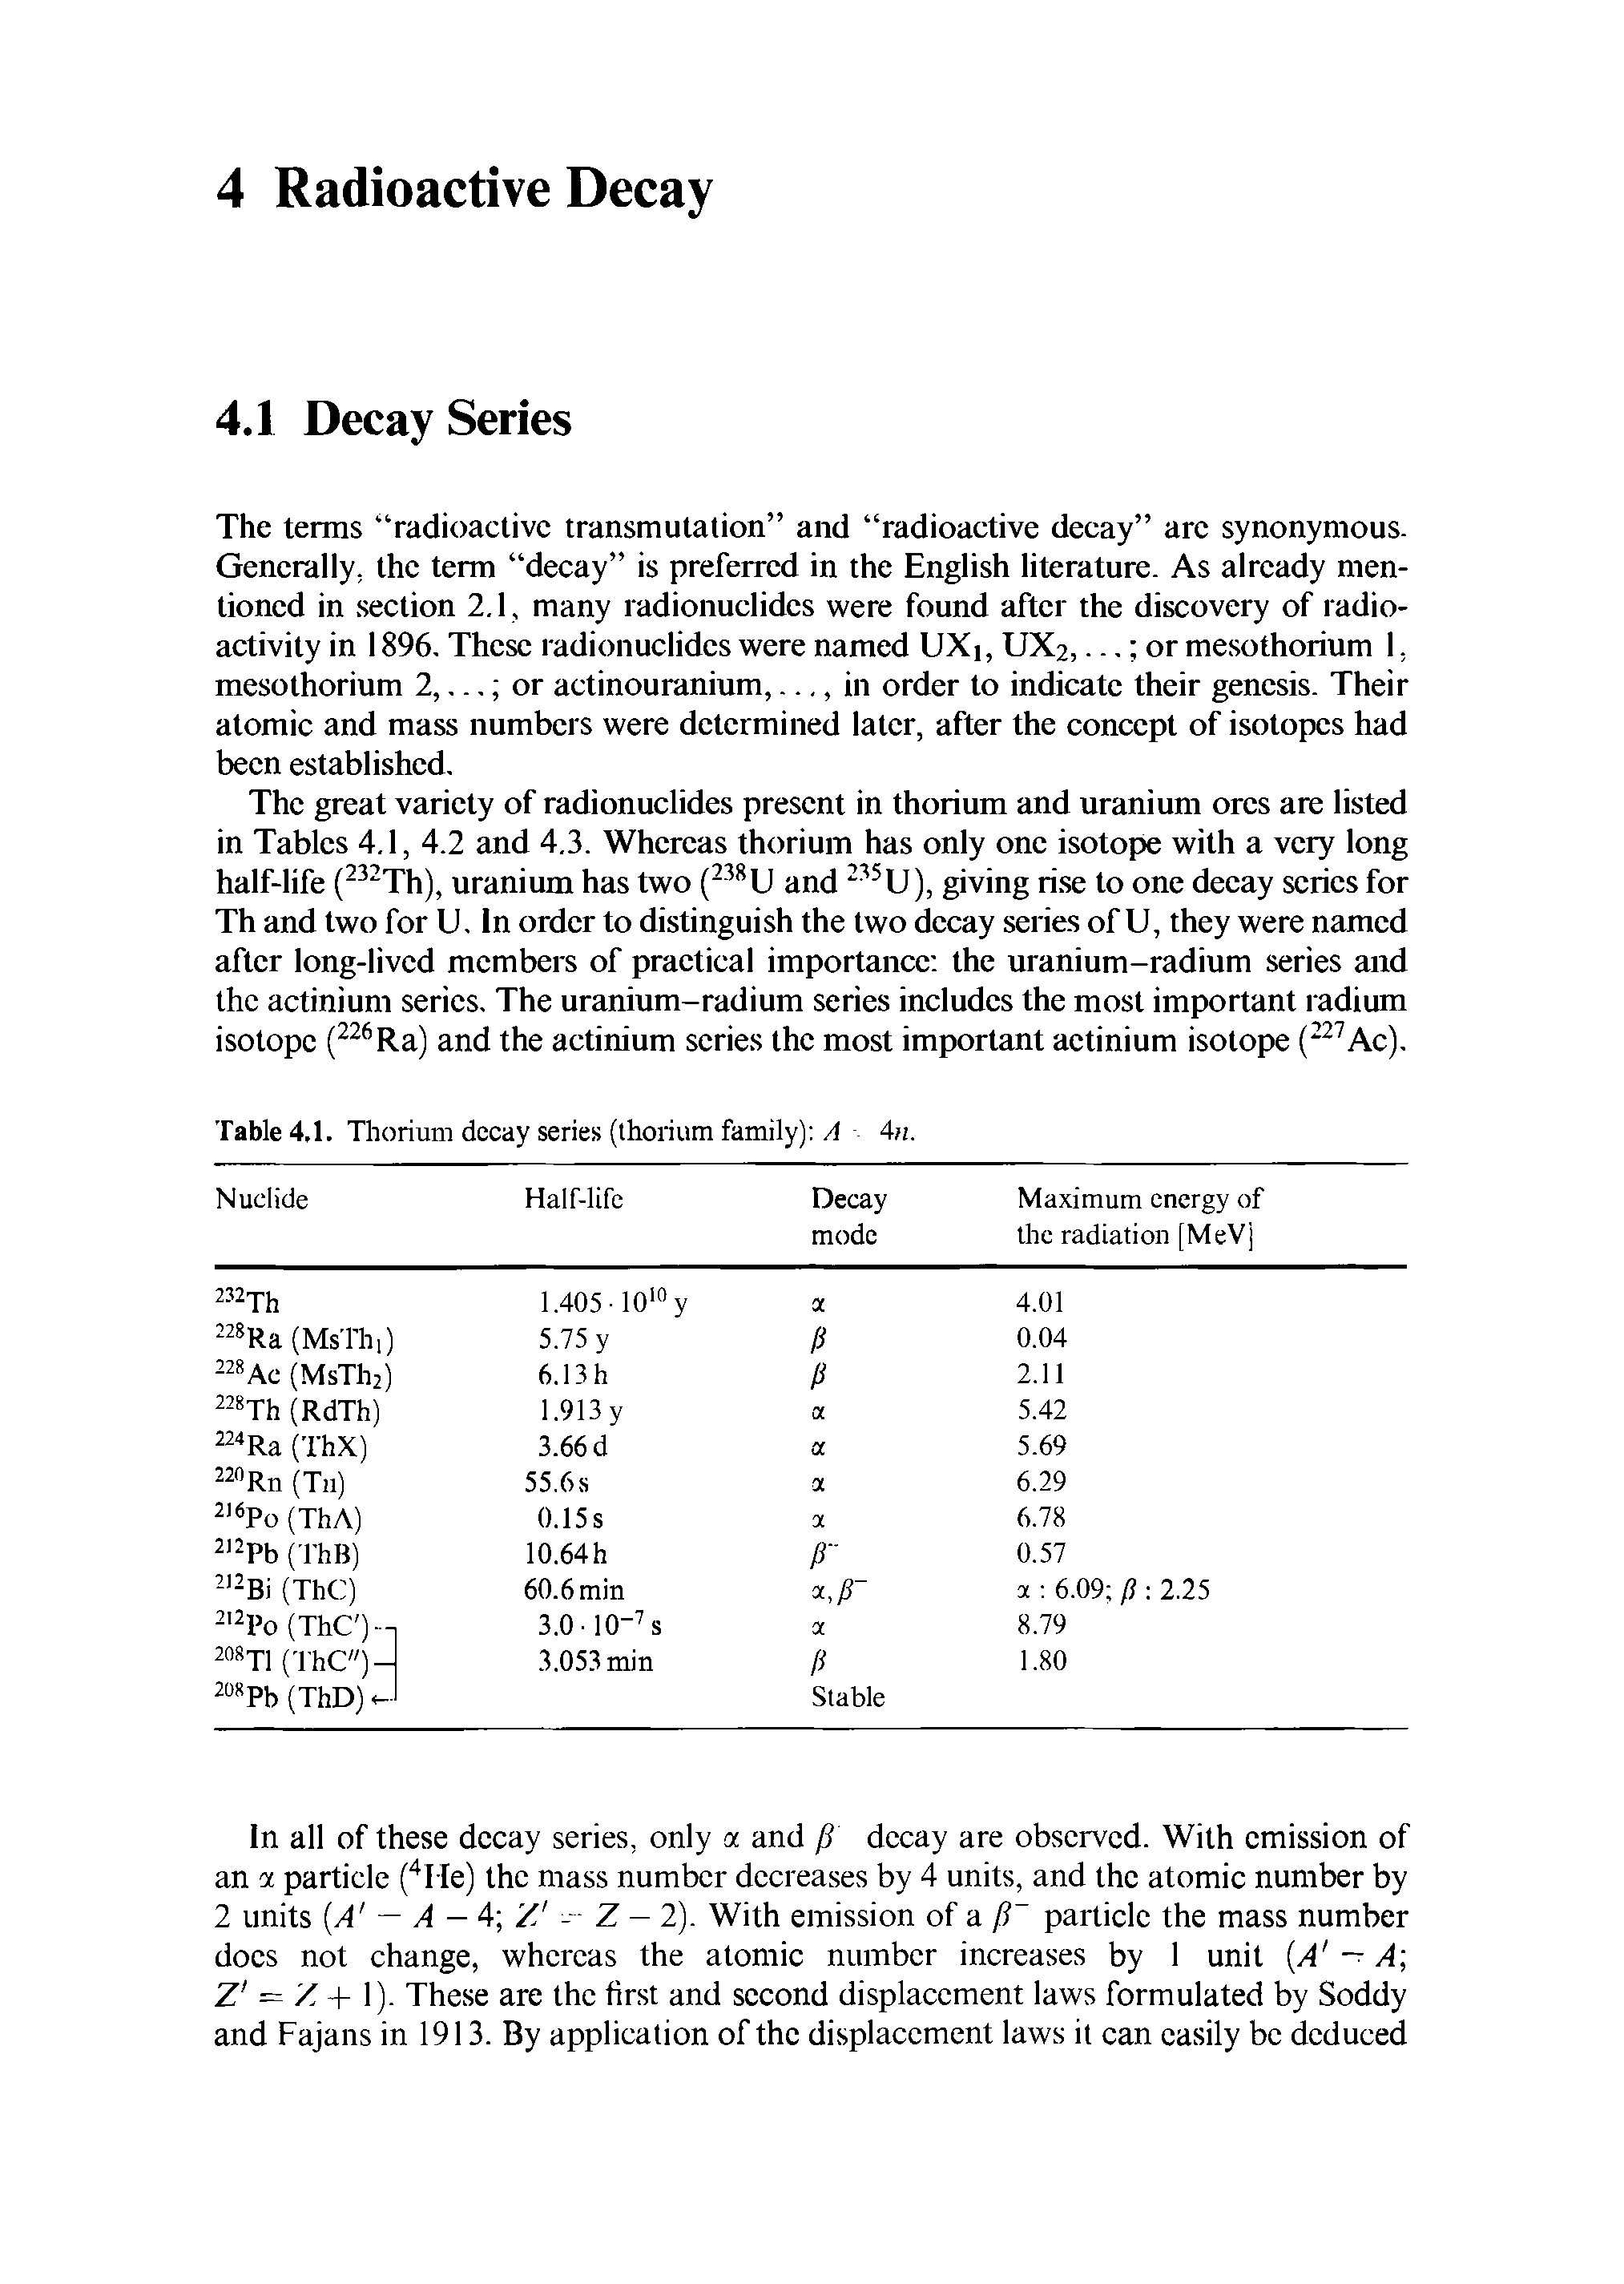 Table 4.1. Thorium decay series (thorium family) A An.